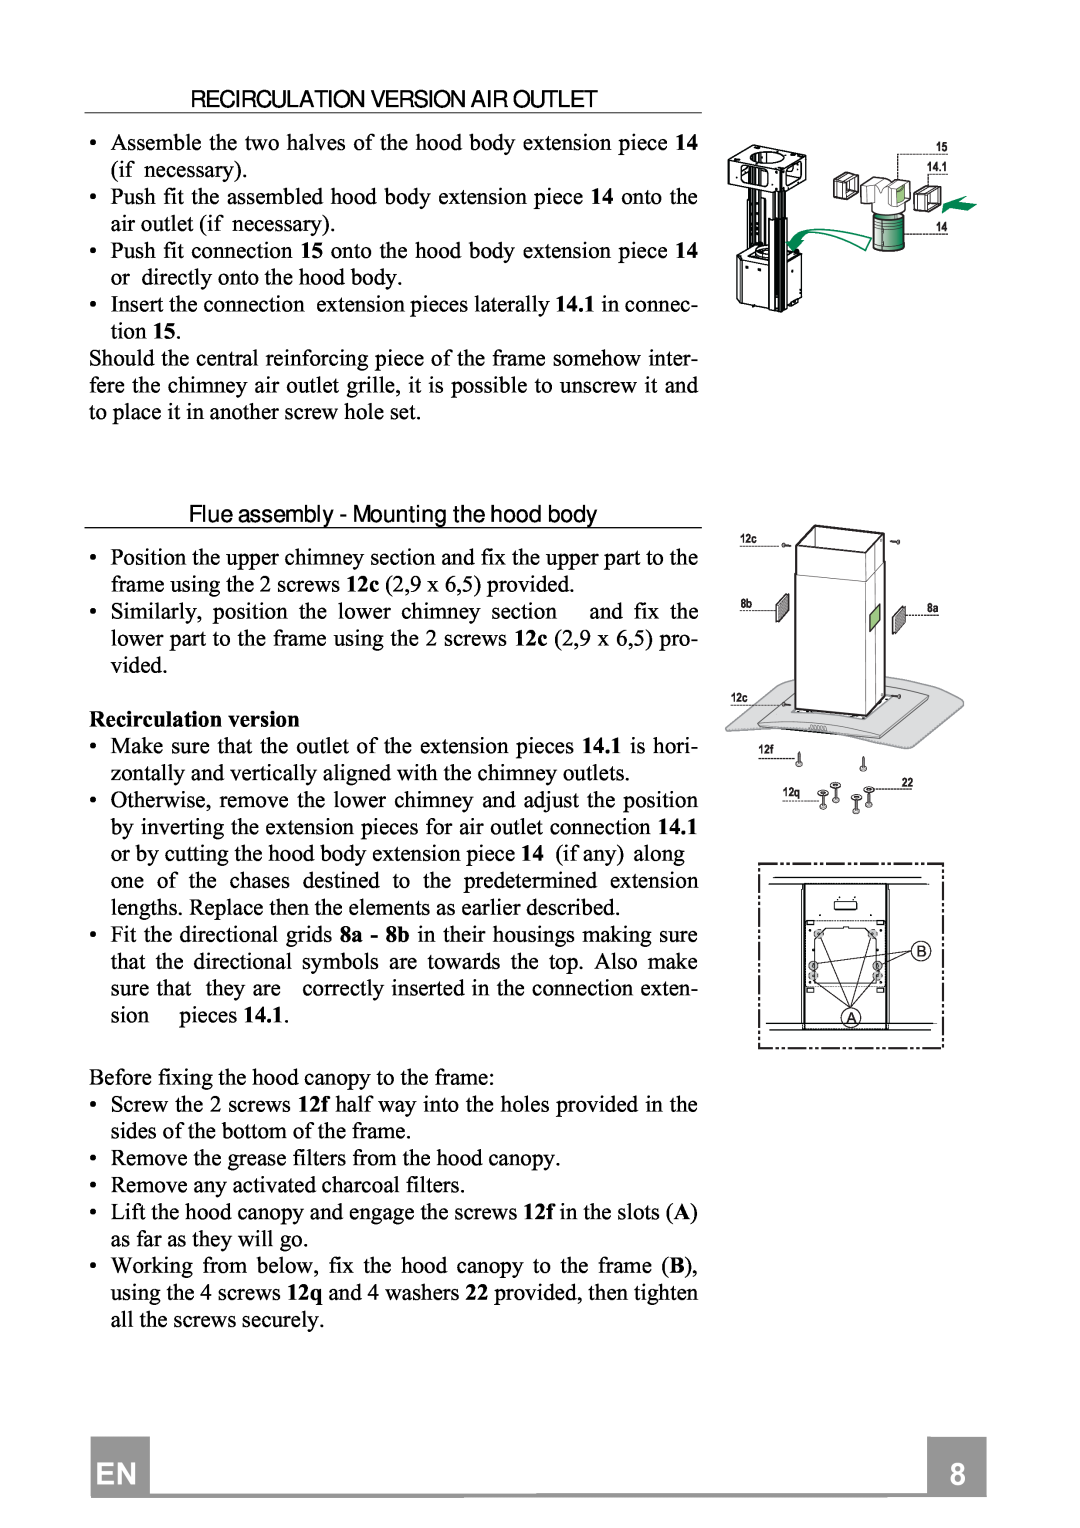 Smeg KIV90XT manual Recirculation Version Air Outlet, Flue assembly - Mounting the hood body, Recirculation version 